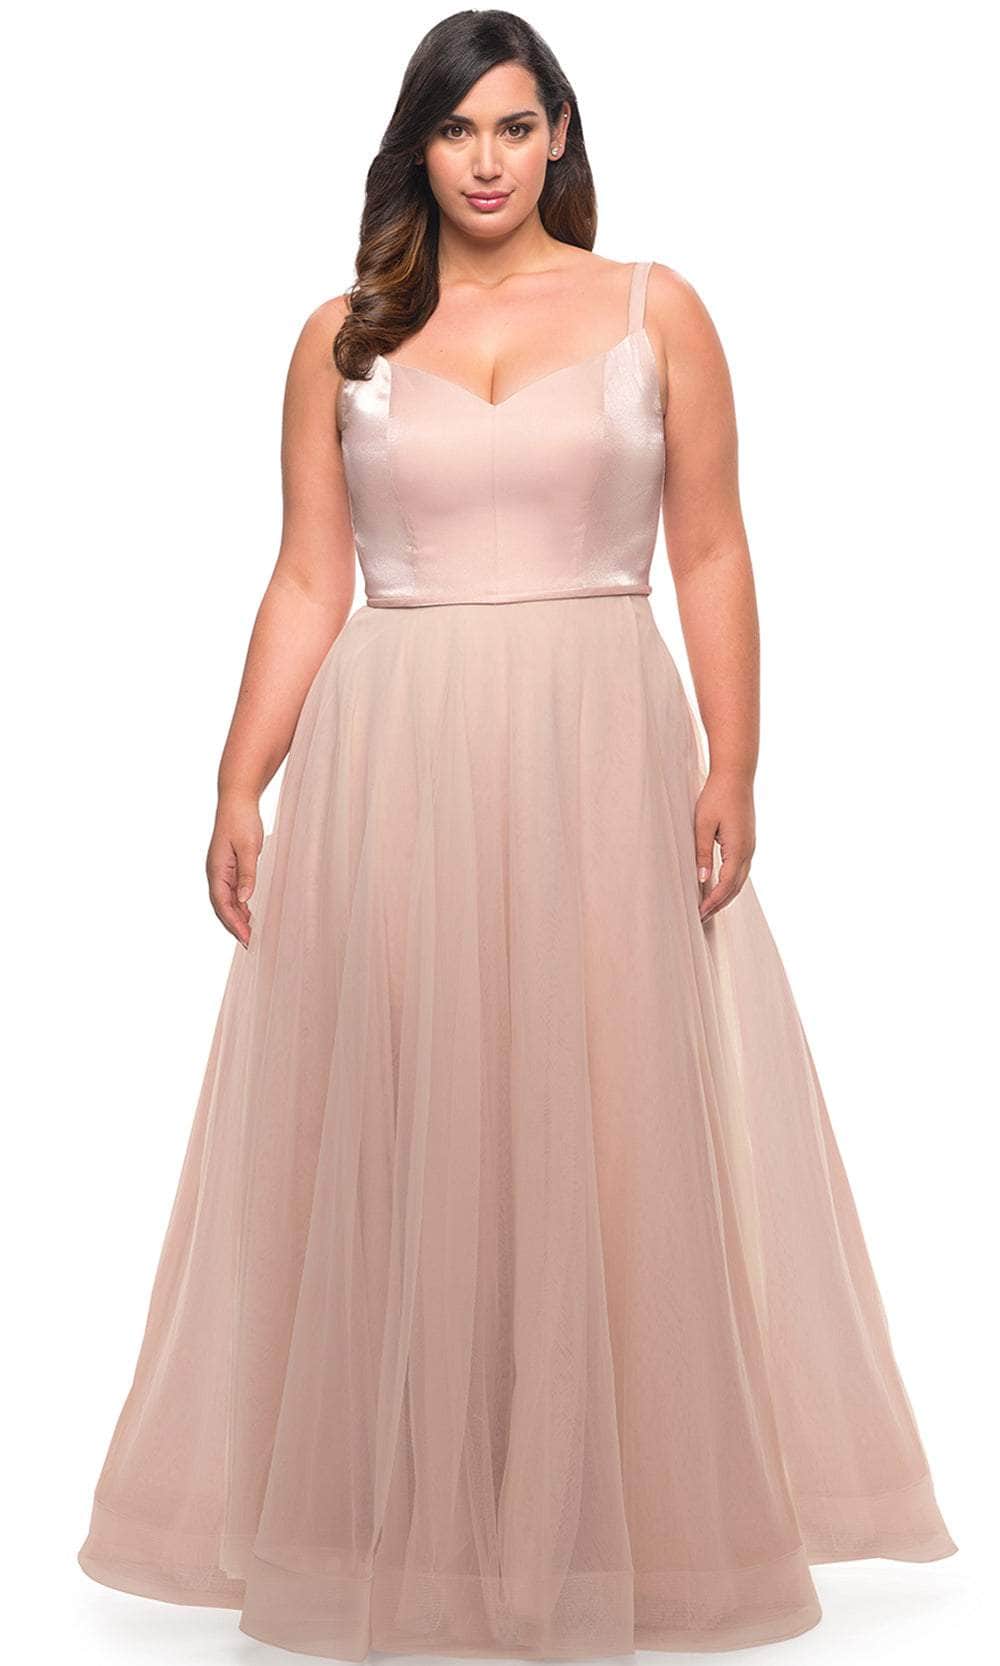 La Femme 29072 - Sleeveless Tulle Prom Dress
